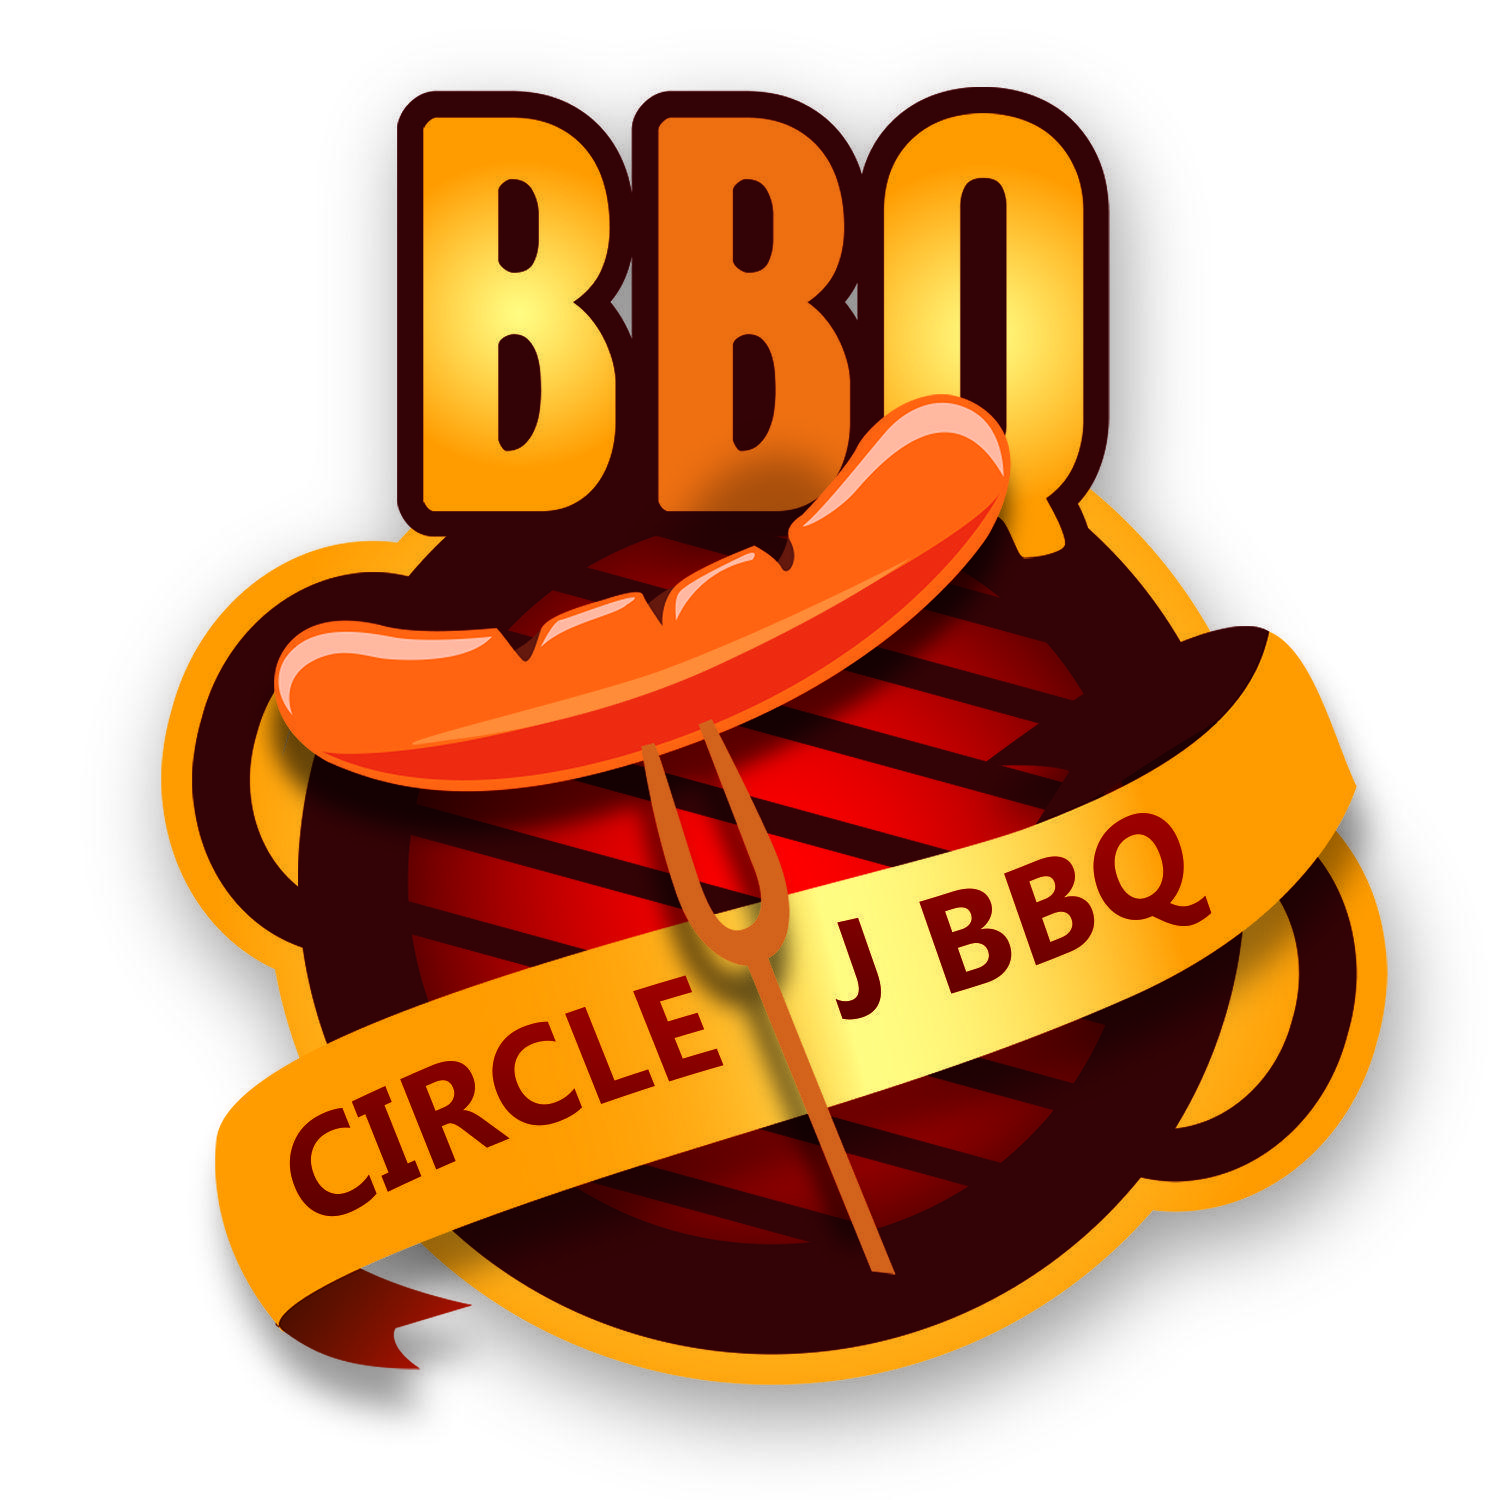 J Restaurant Logo - Bold, Traditional, Restaurant Logo Design for Circle J BBQ by Spark ...